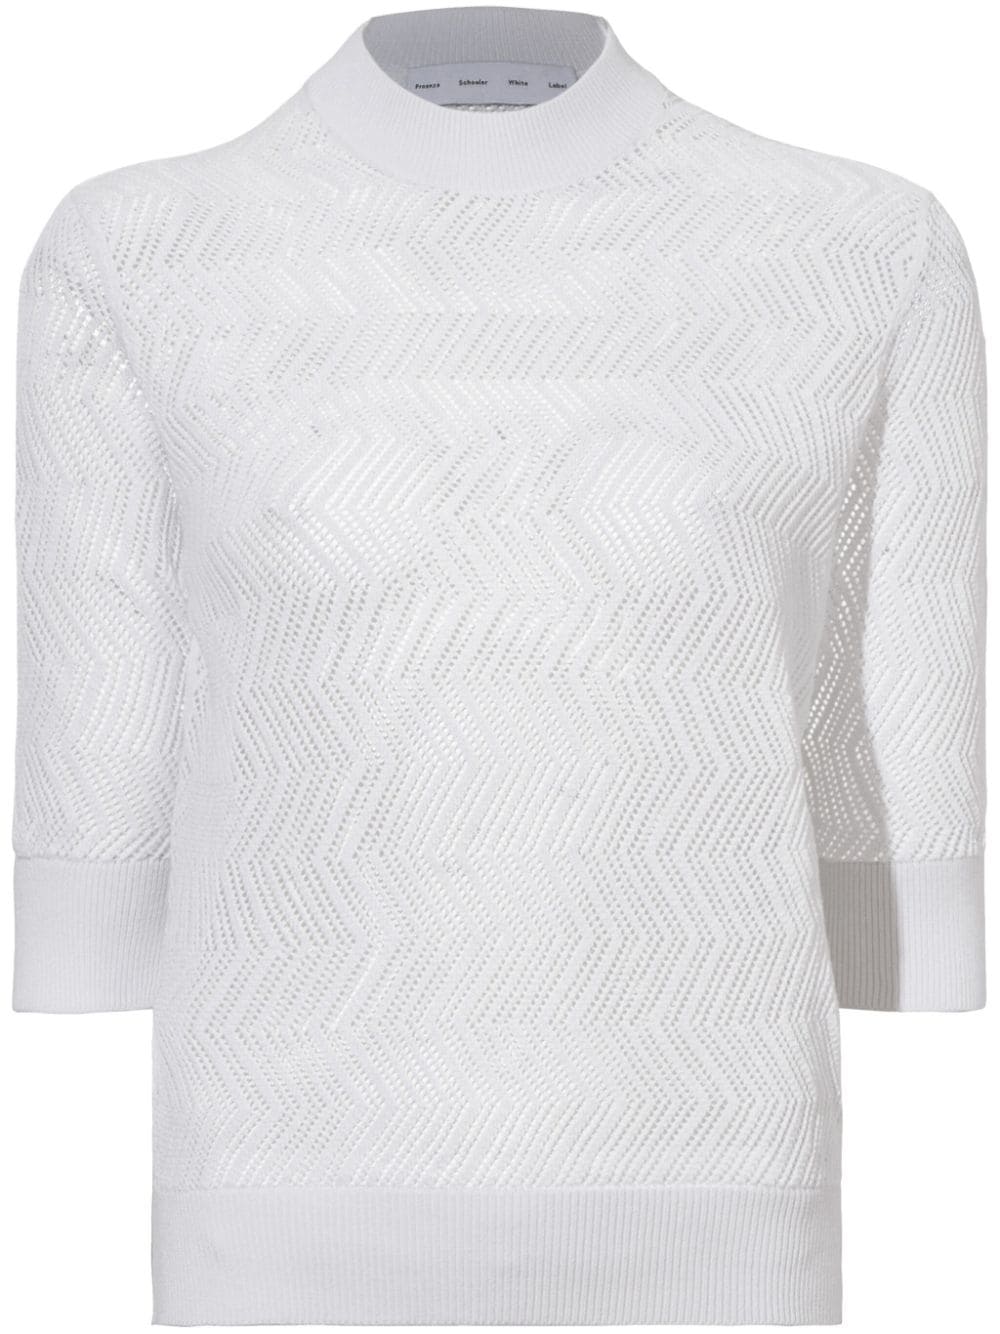 Proenza Schouler White Label Nicola Pointelle-knit Cotton Top In White